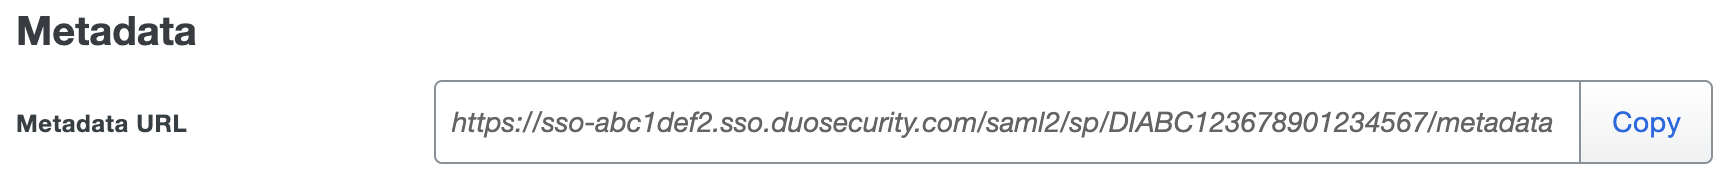 Duo Barracuda Web Application Firewall Metadata URL